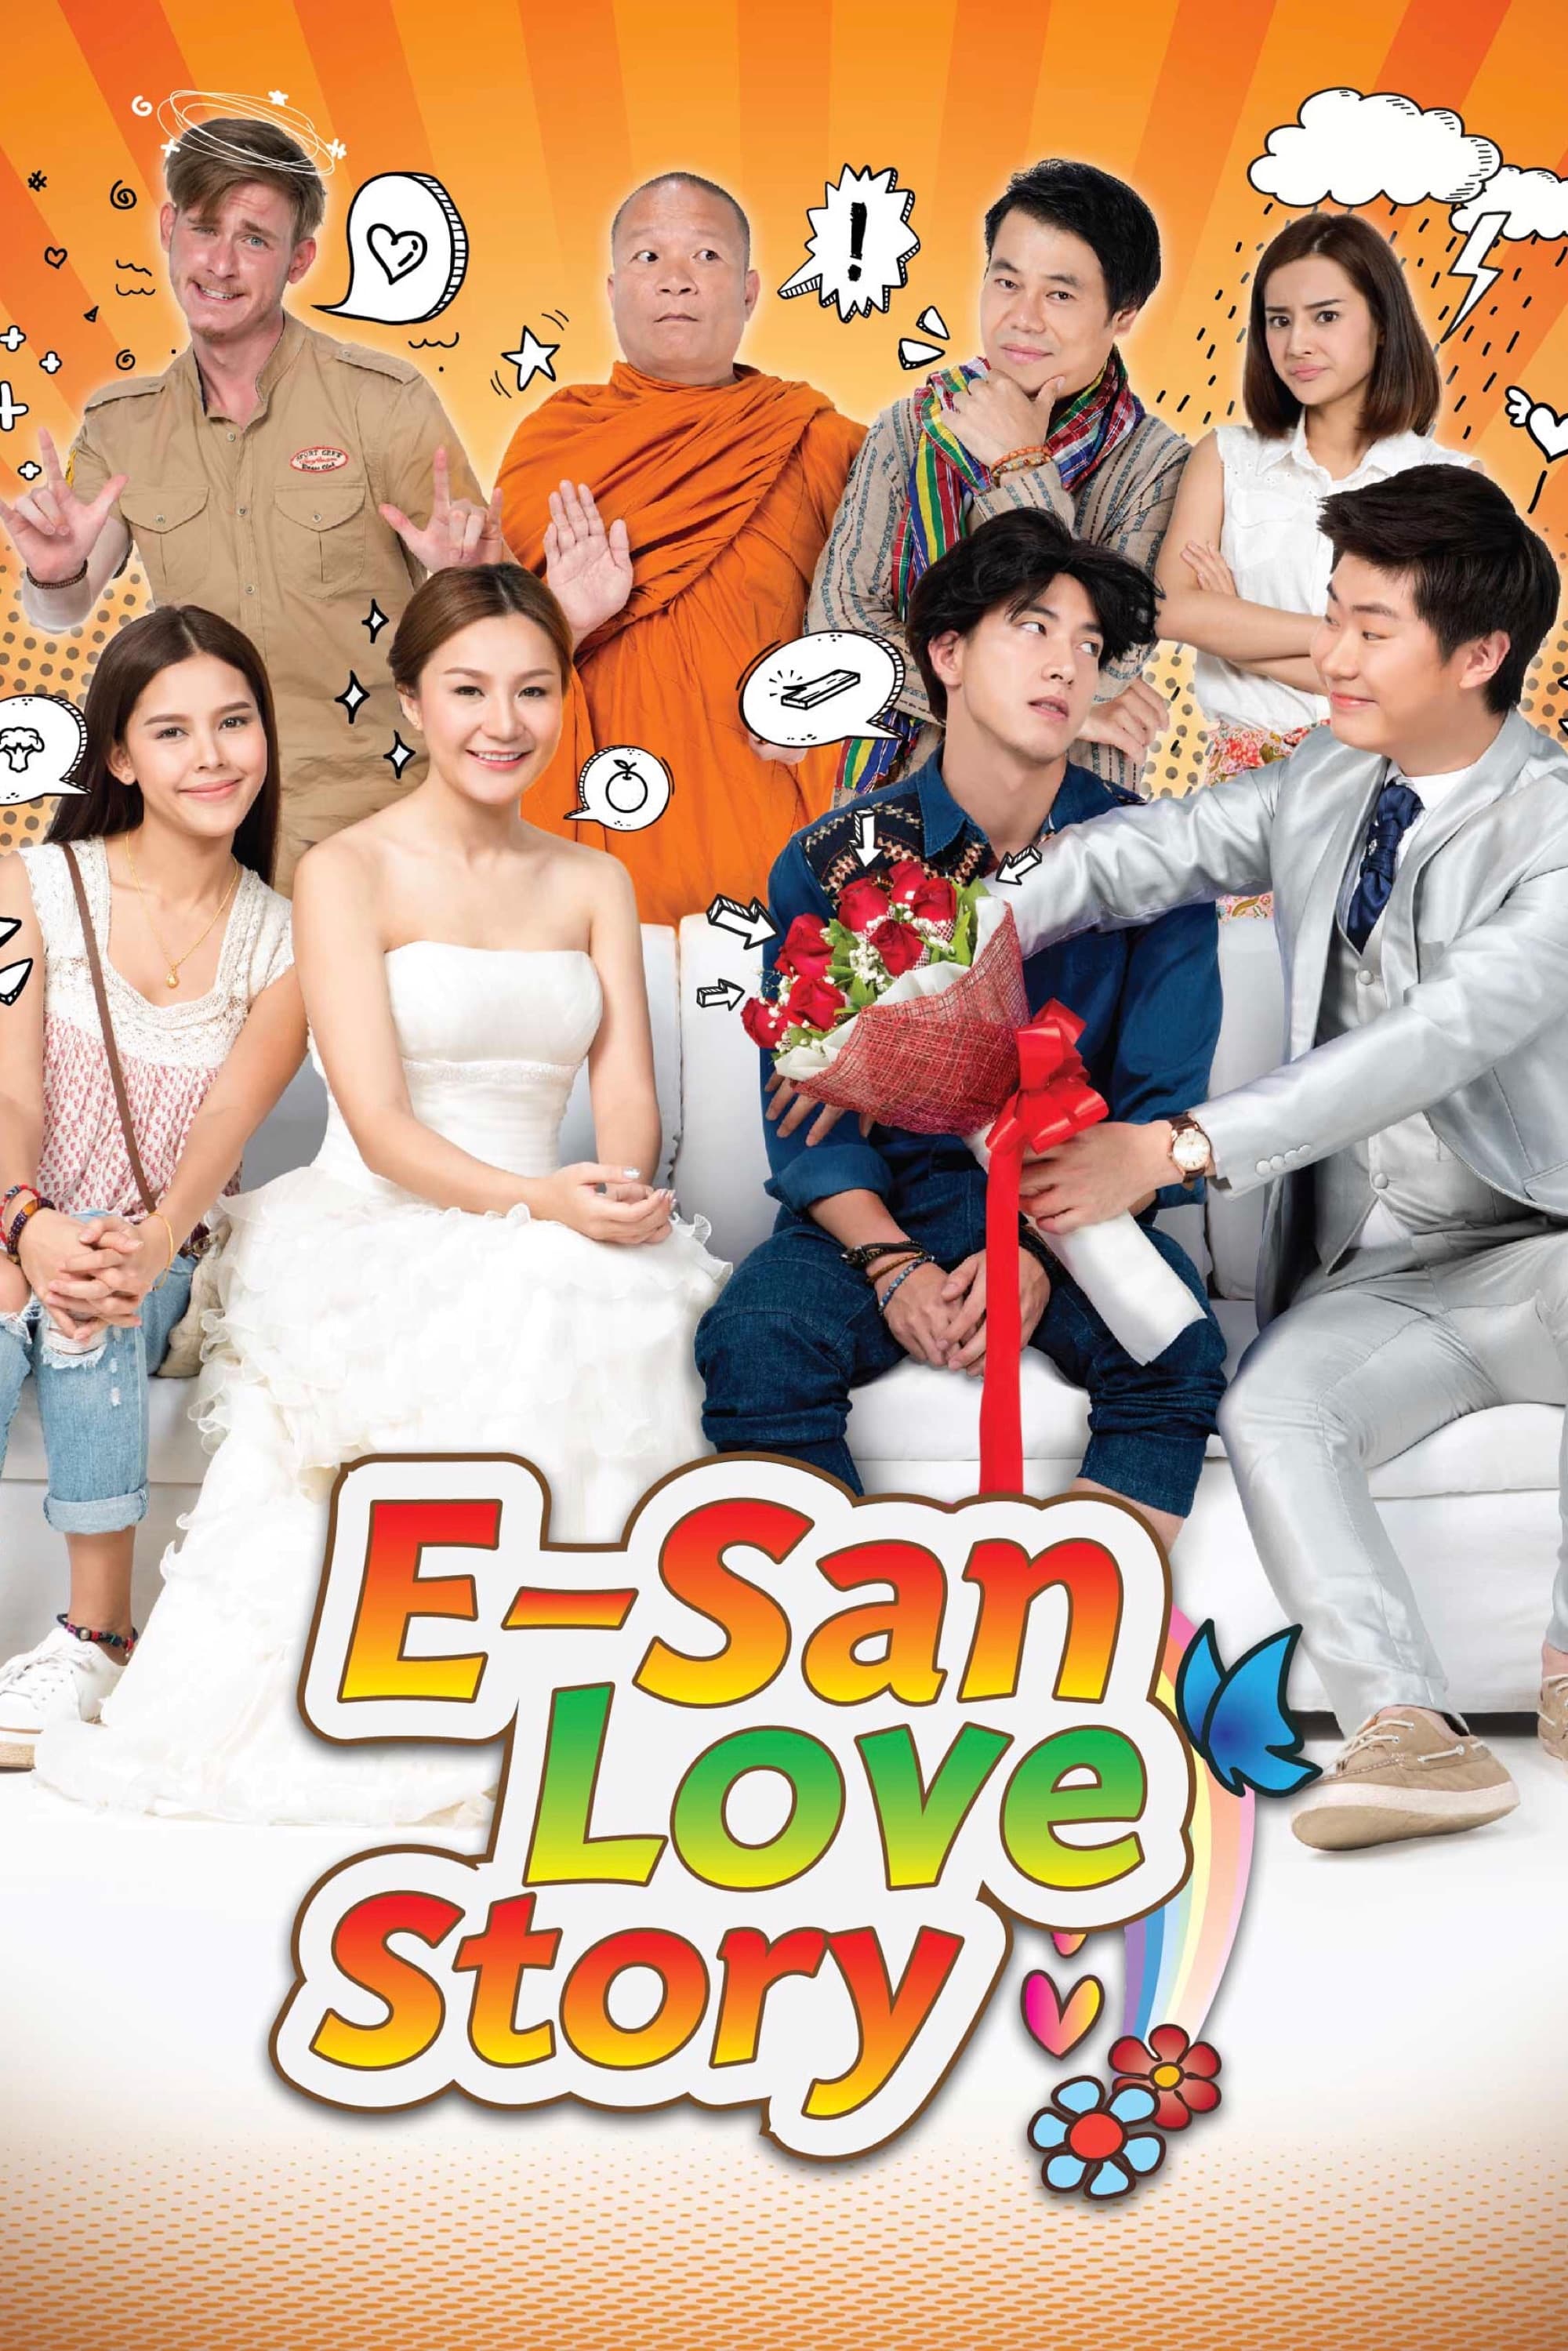 E-San Love Story